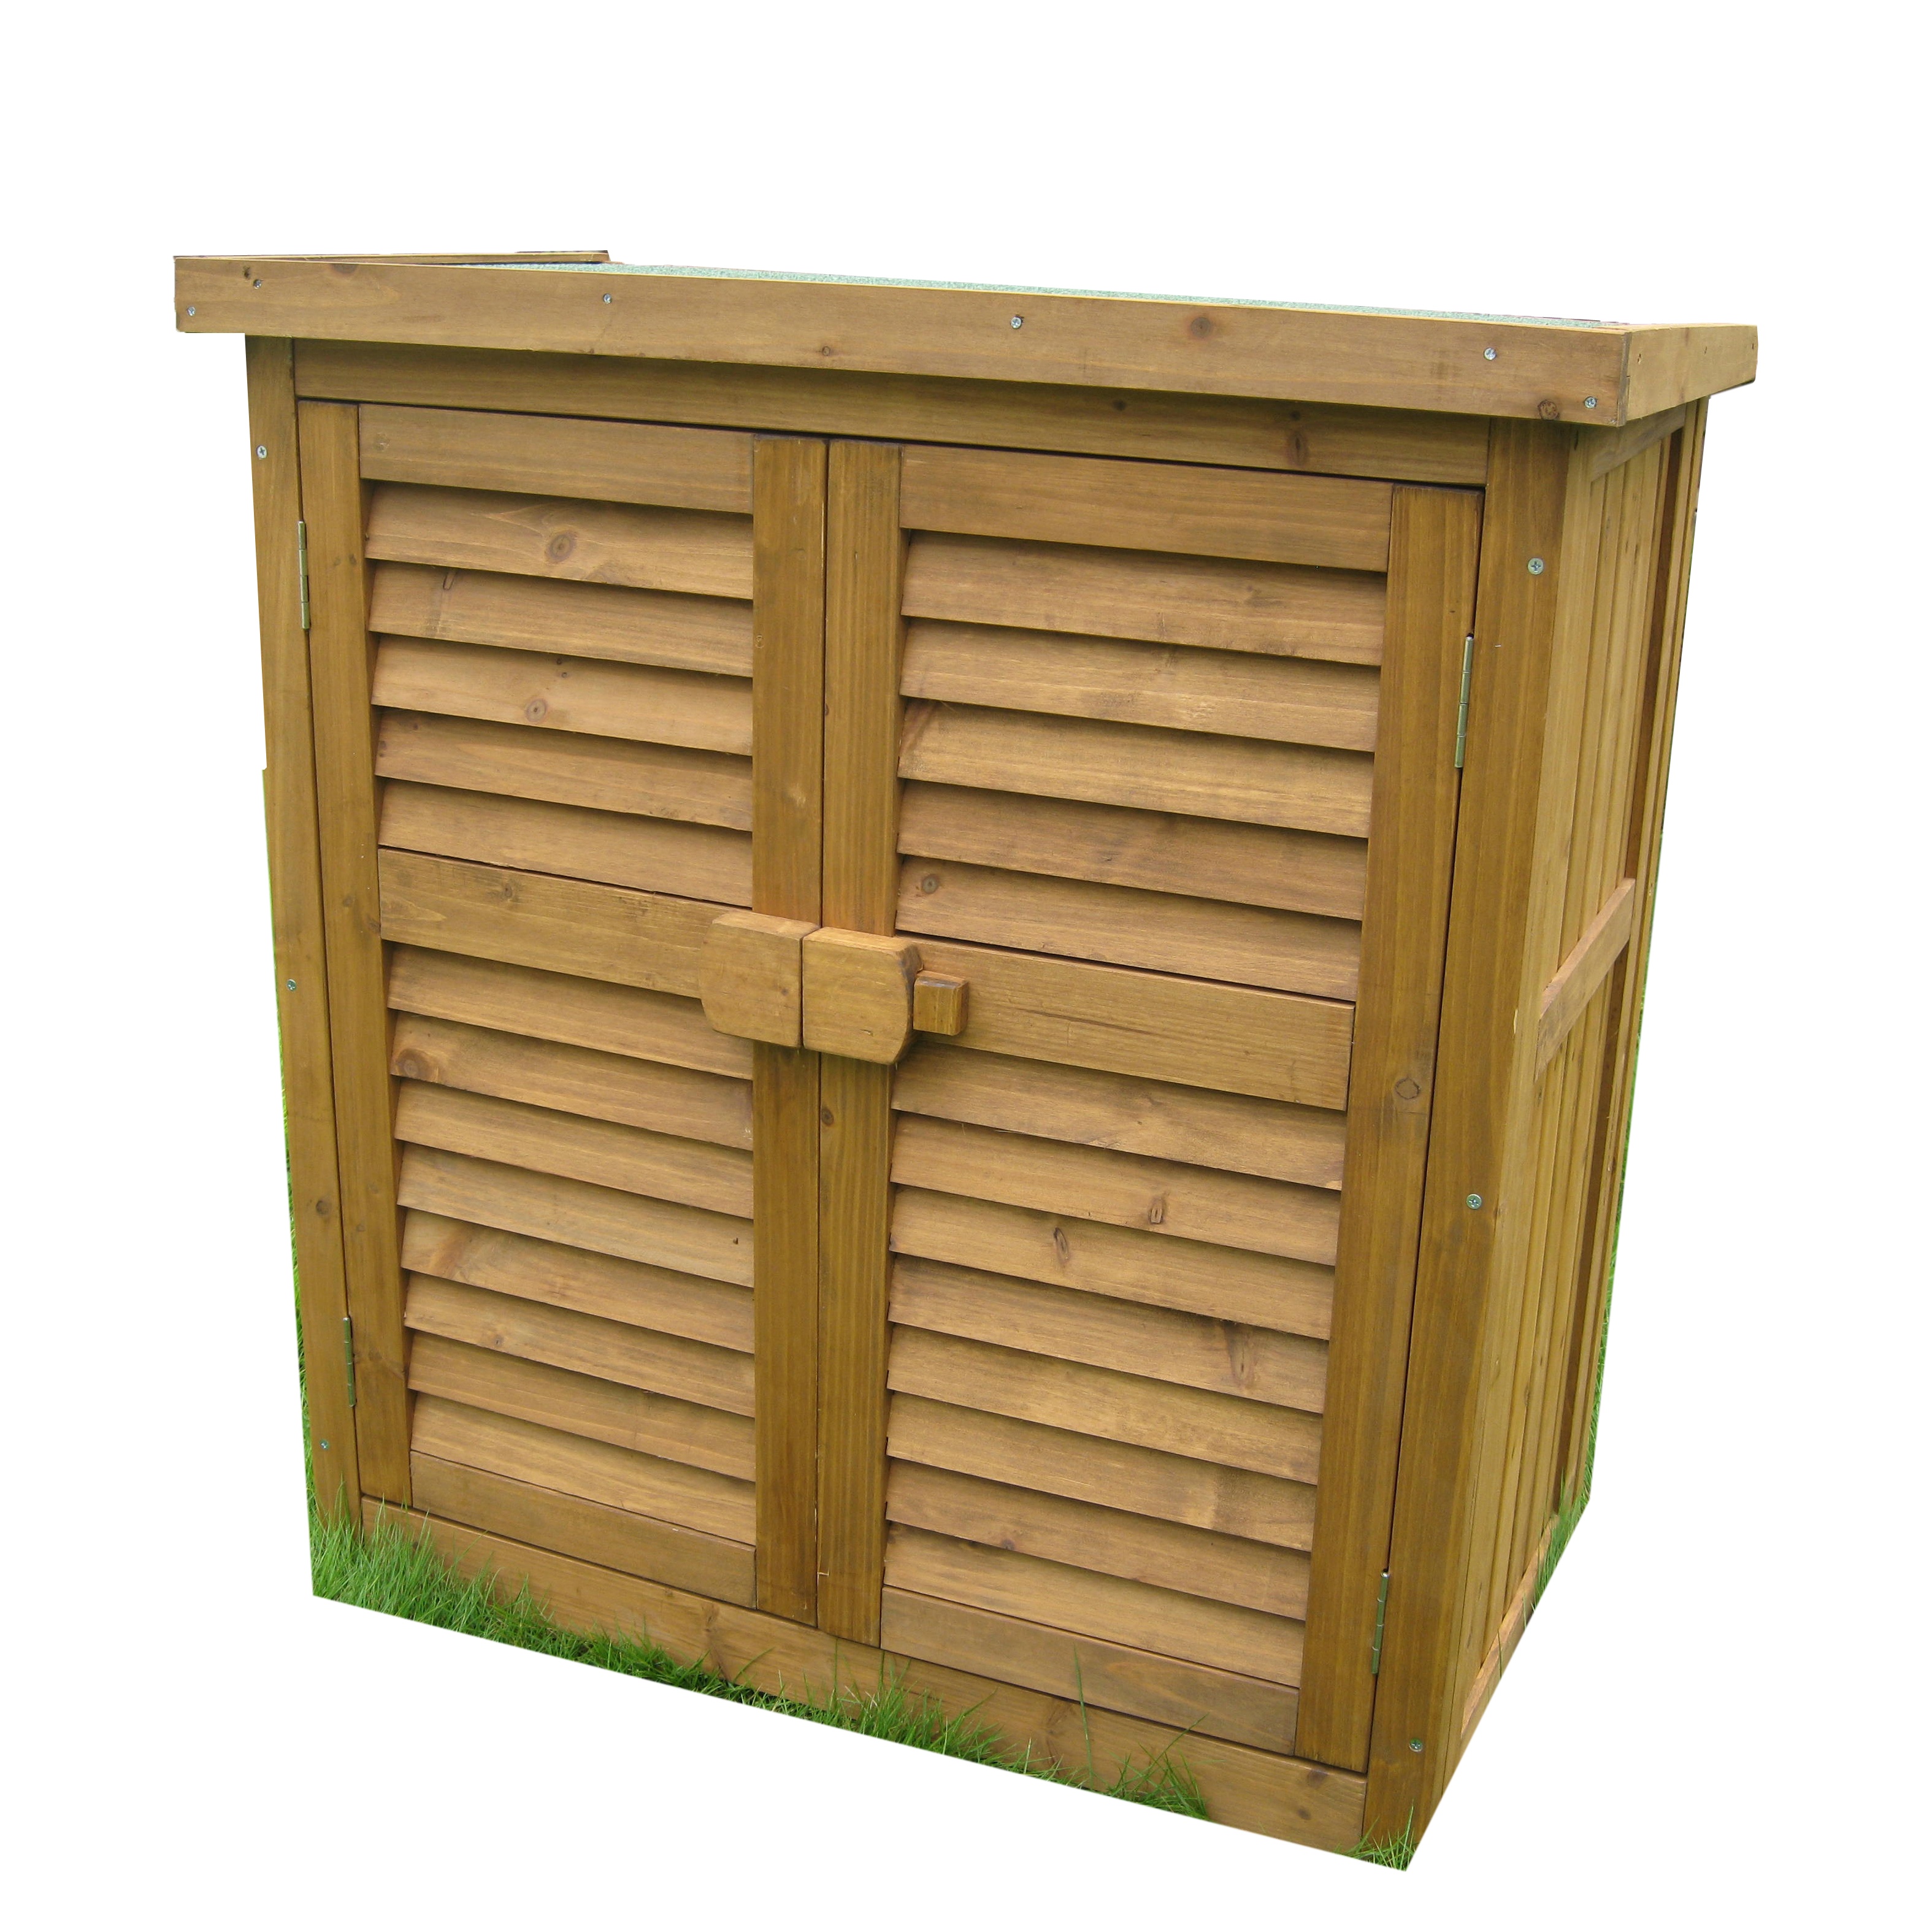 Luxury design waterproof wood Garden Furniture outdoor storage sheds chest tool shelves